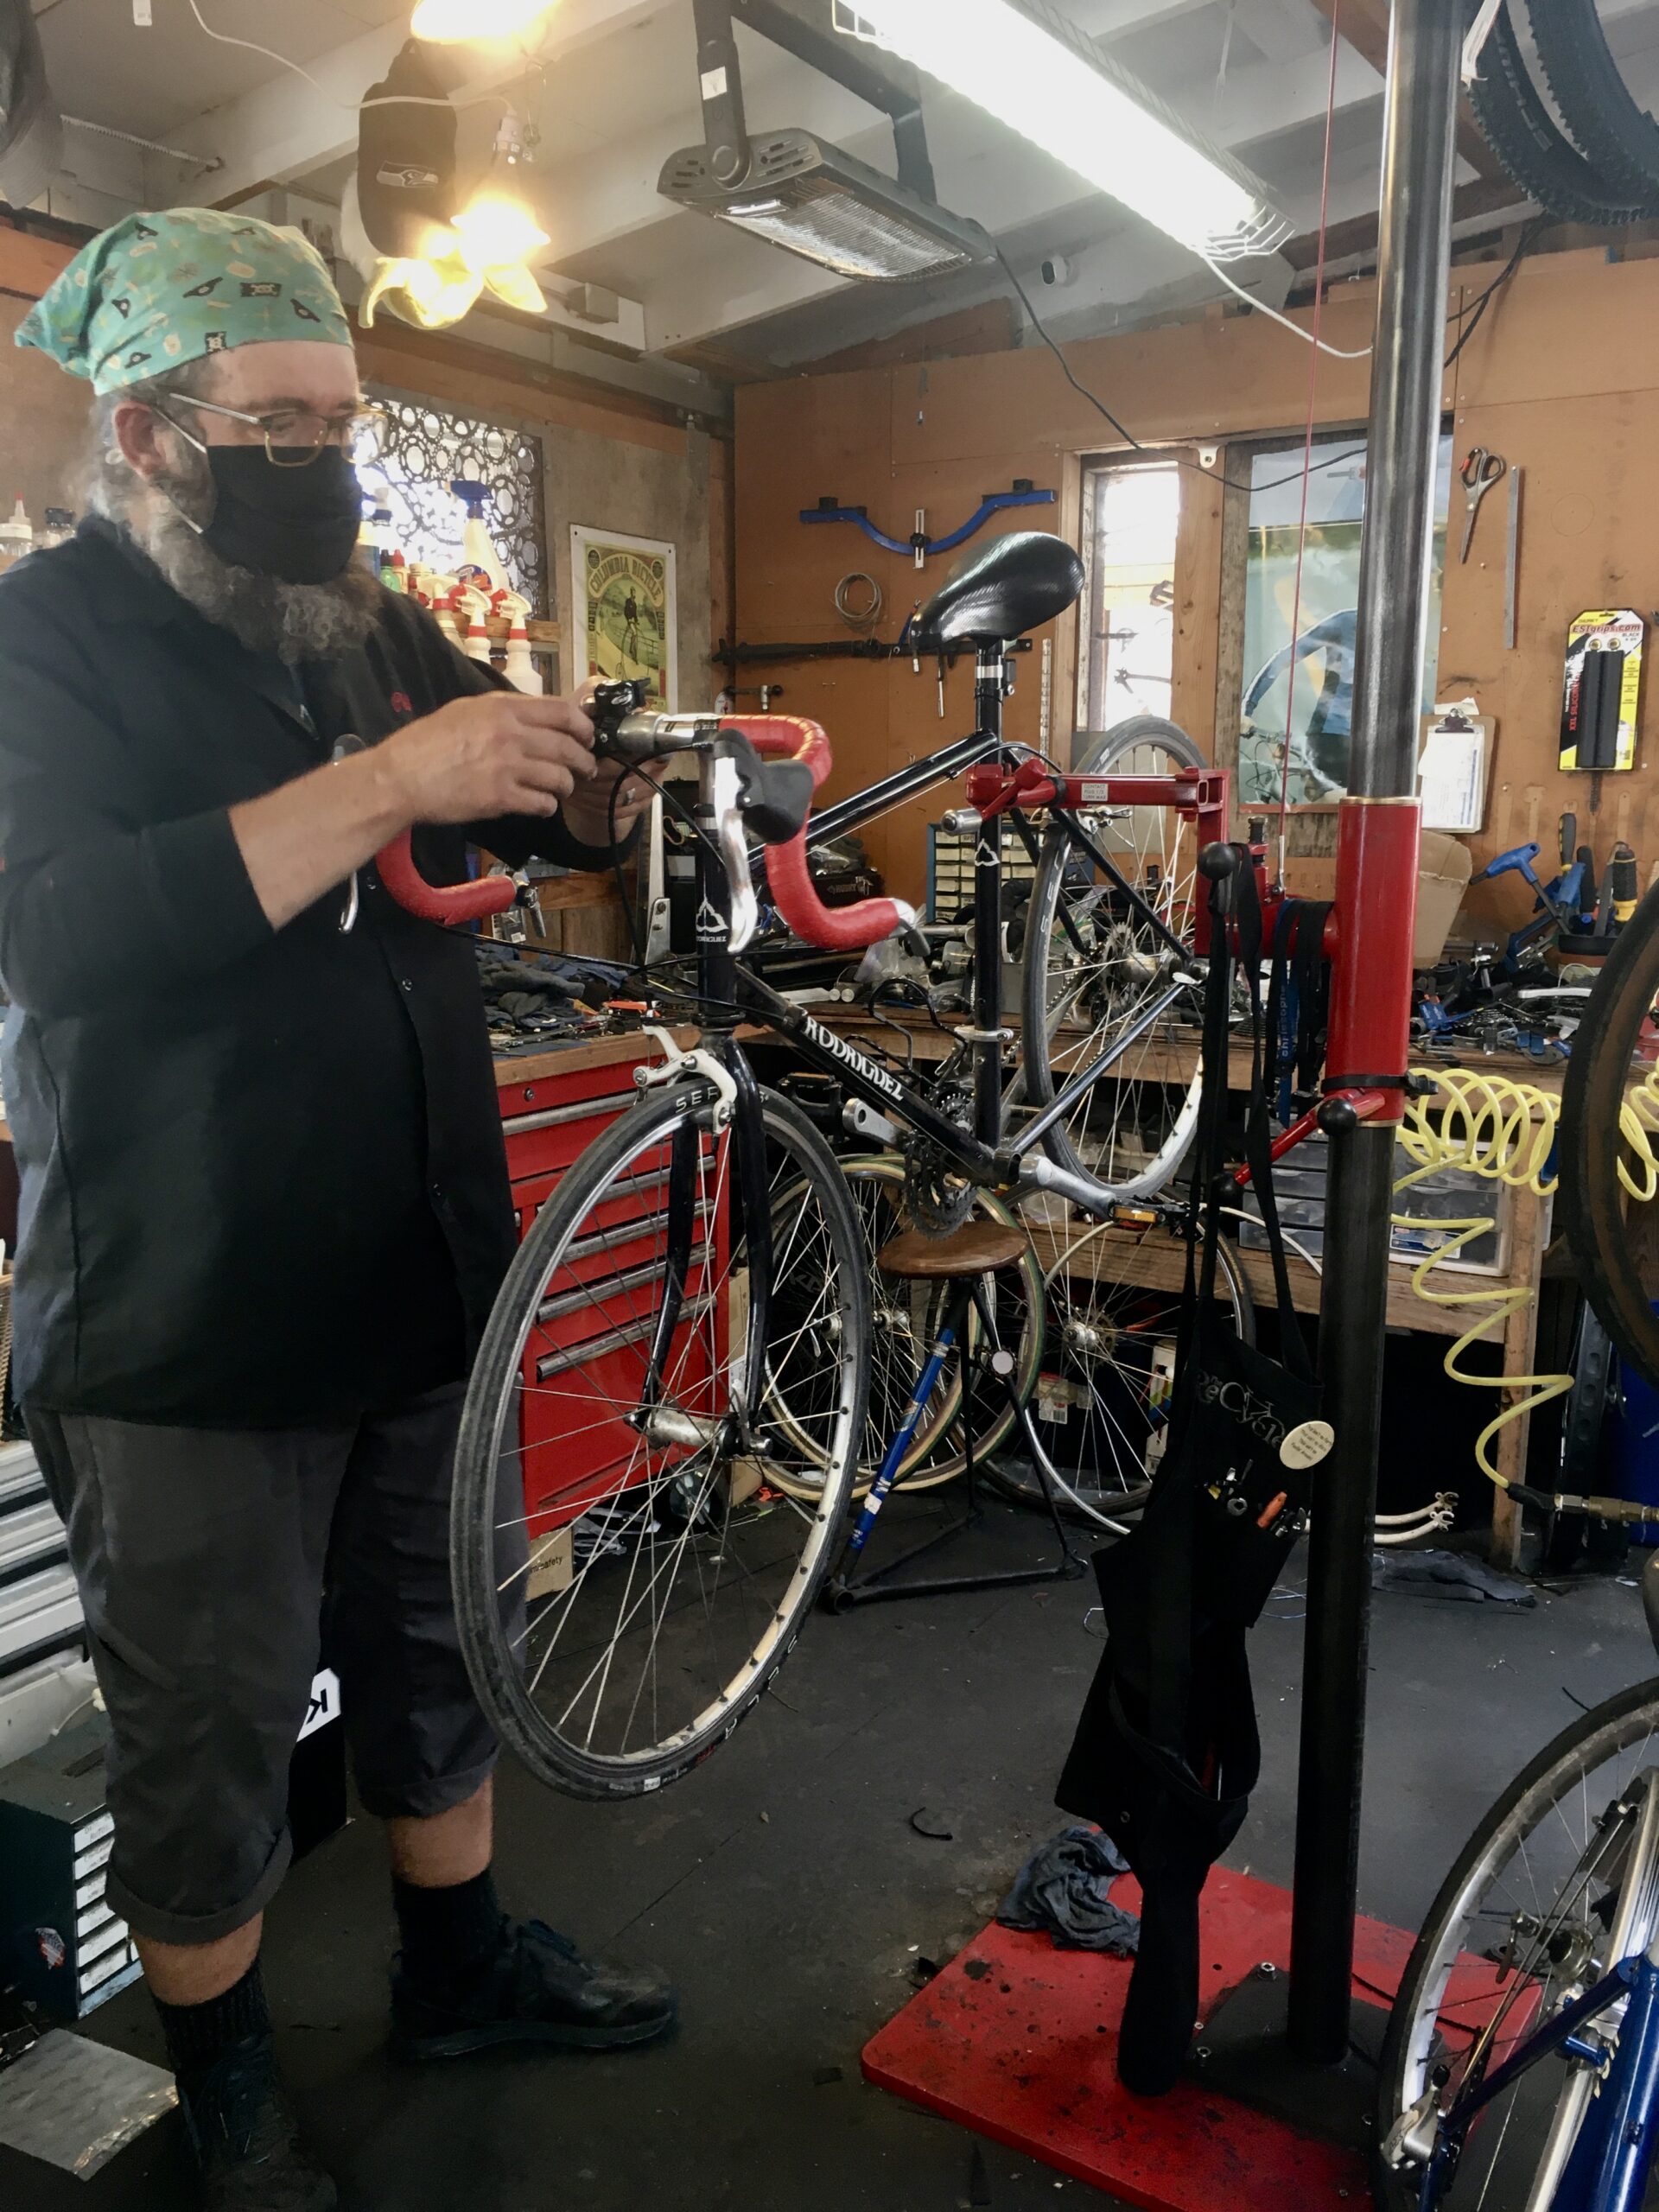 Bike being fixed repair